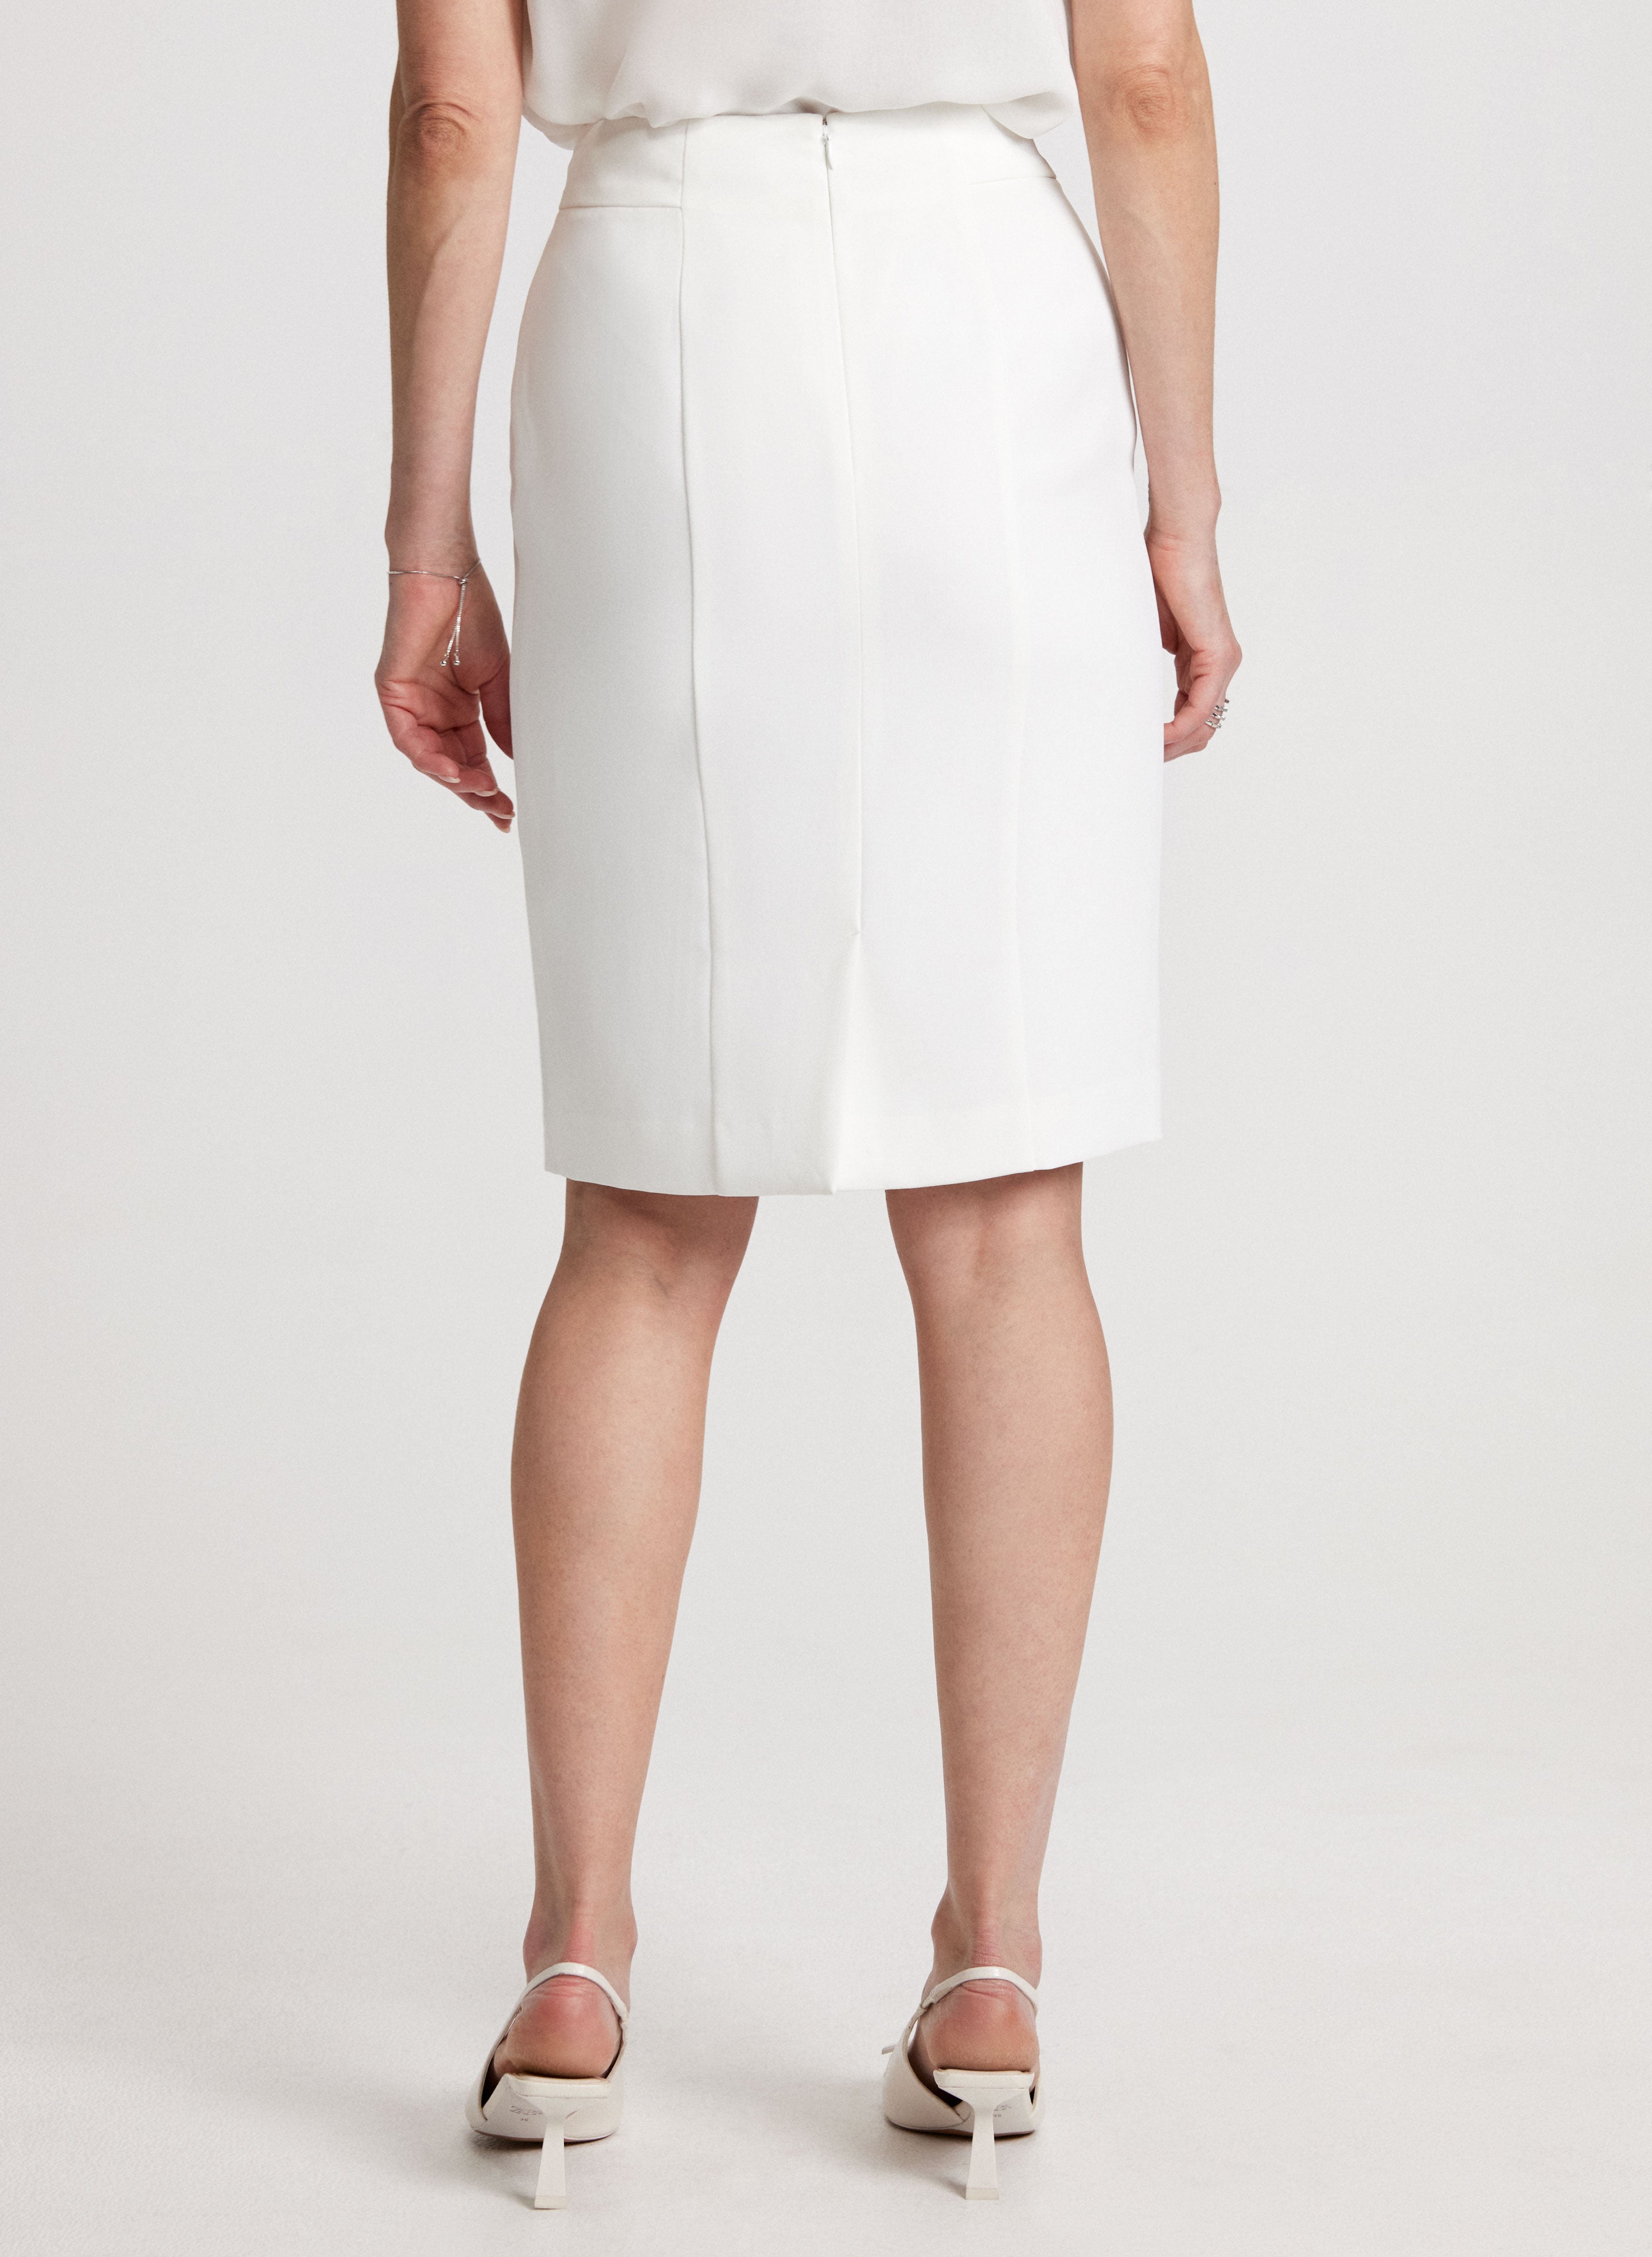 White Pencil Women Shapewear Skirt, Ladies Cotton with Drawstring